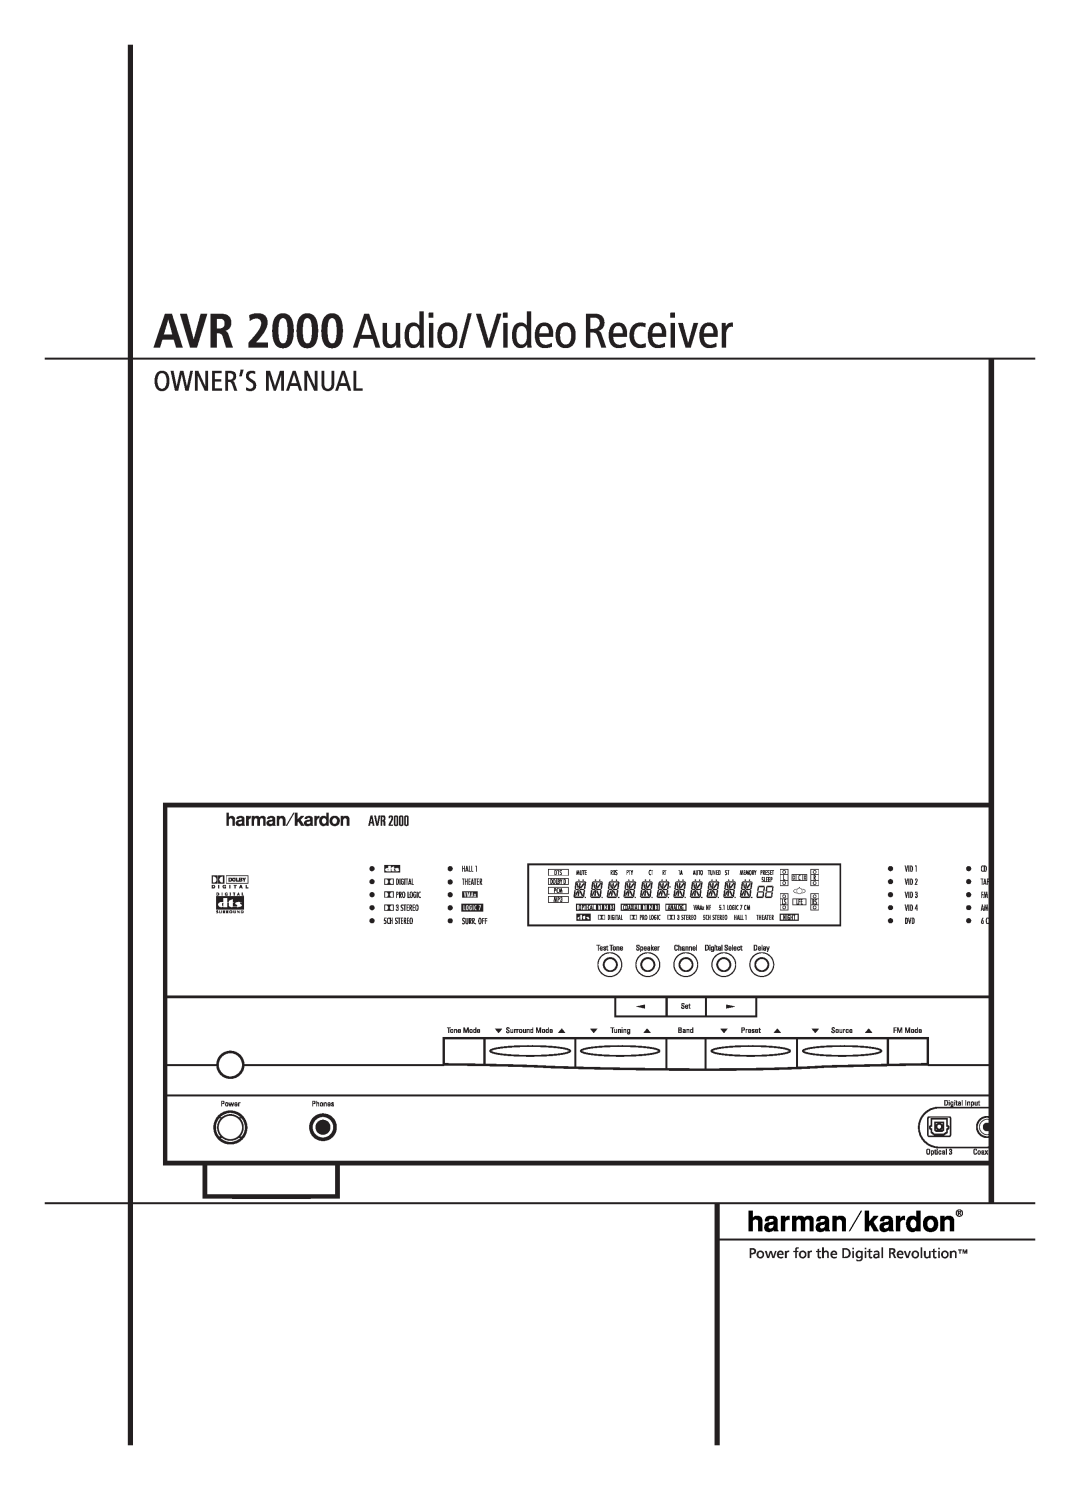 Harman-Kardon owner manual AVR 2000 Audio/ Video Receiver 